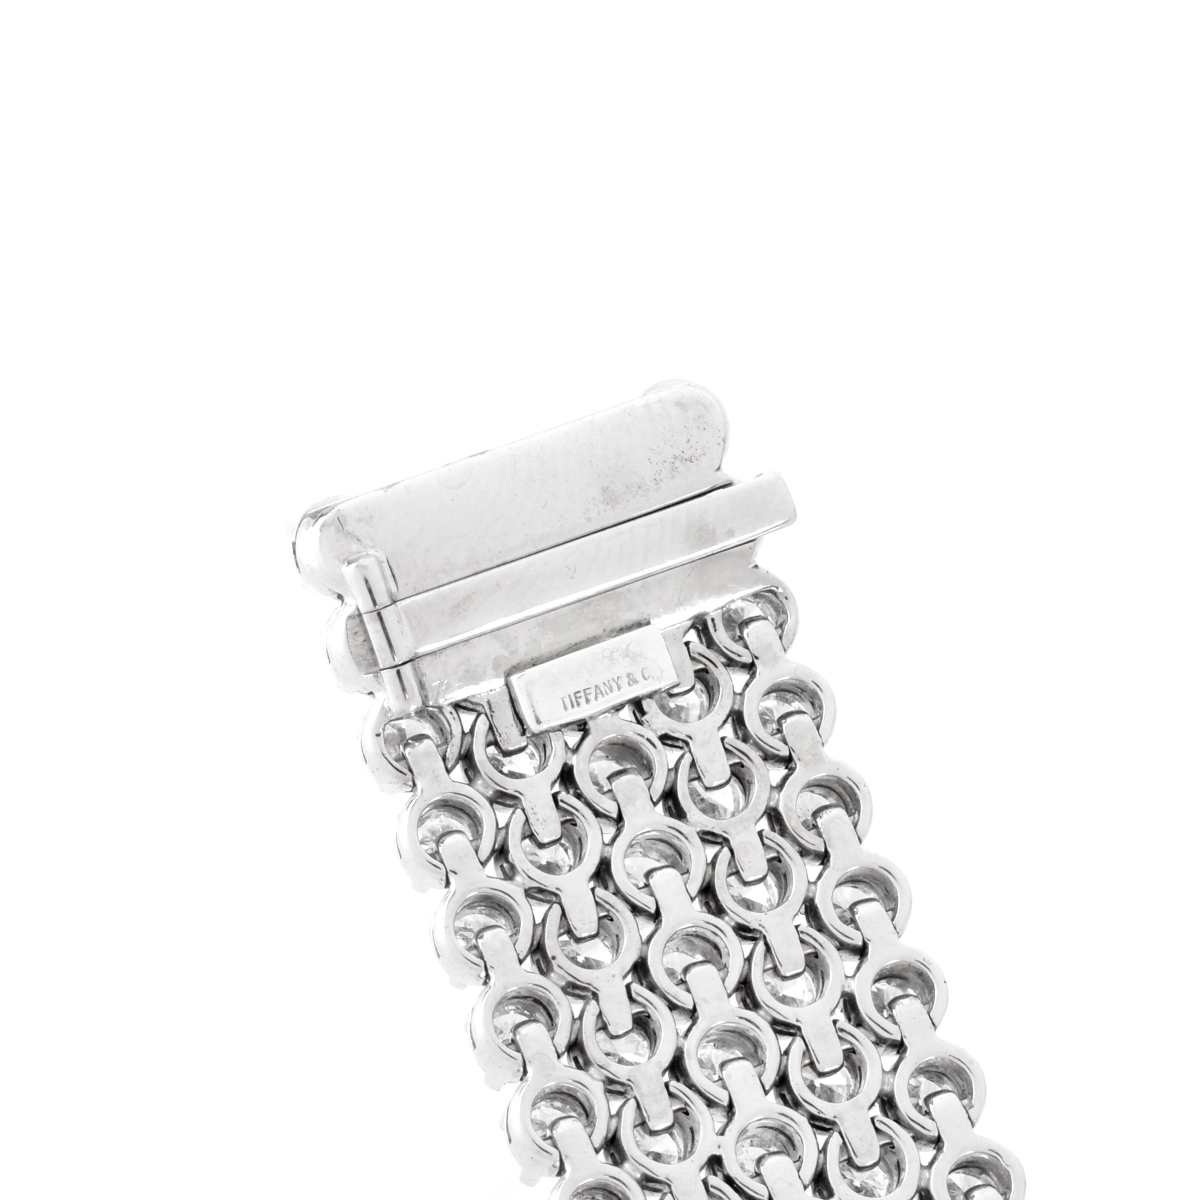 Tiffany & Co Diamond Bracelet